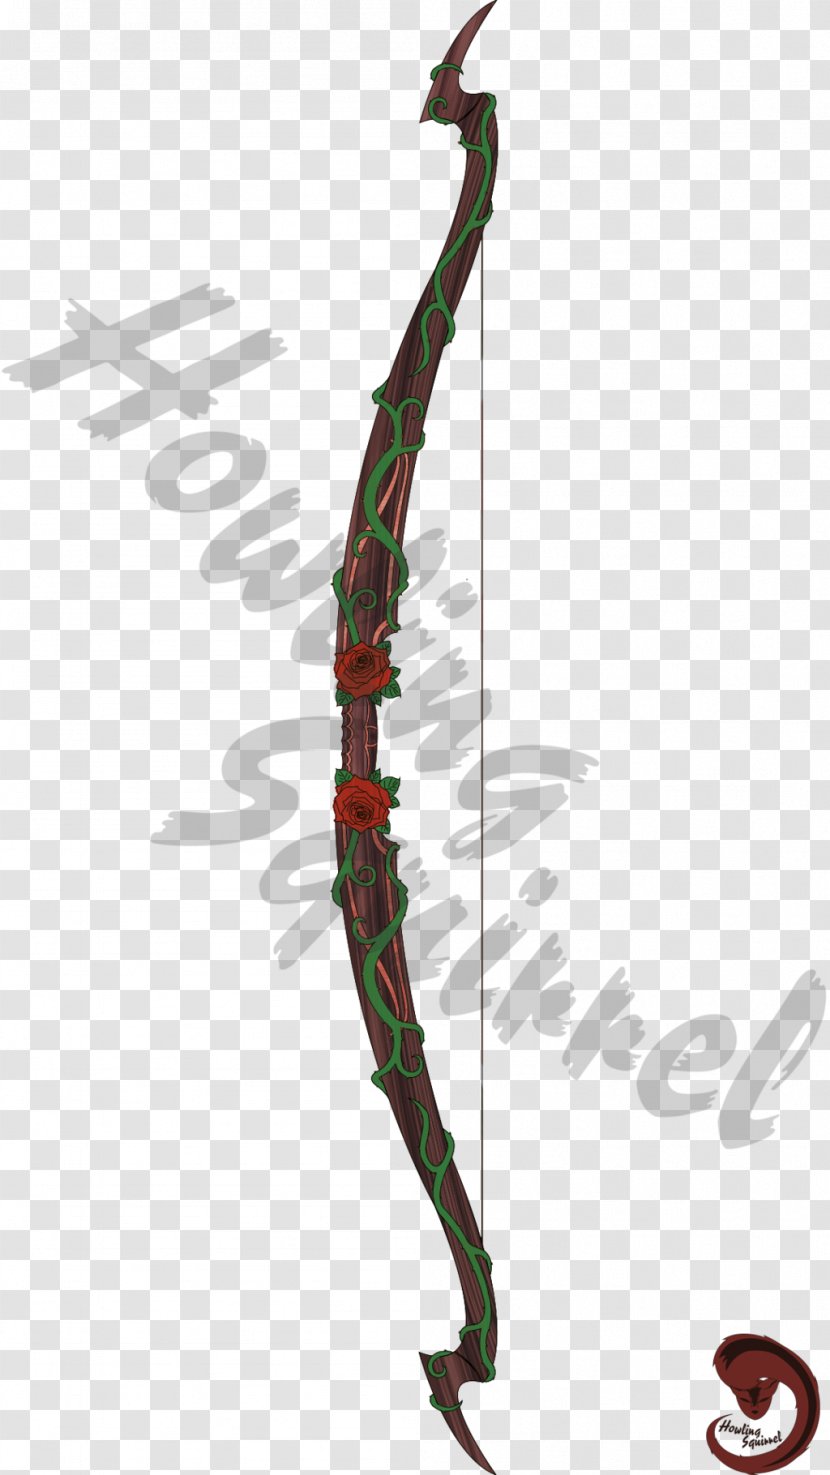 Ranged Weapon Tree Twig Hoveniersbedrijf/Kwekerij Alfred Scholing - Thorns Transparent PNG